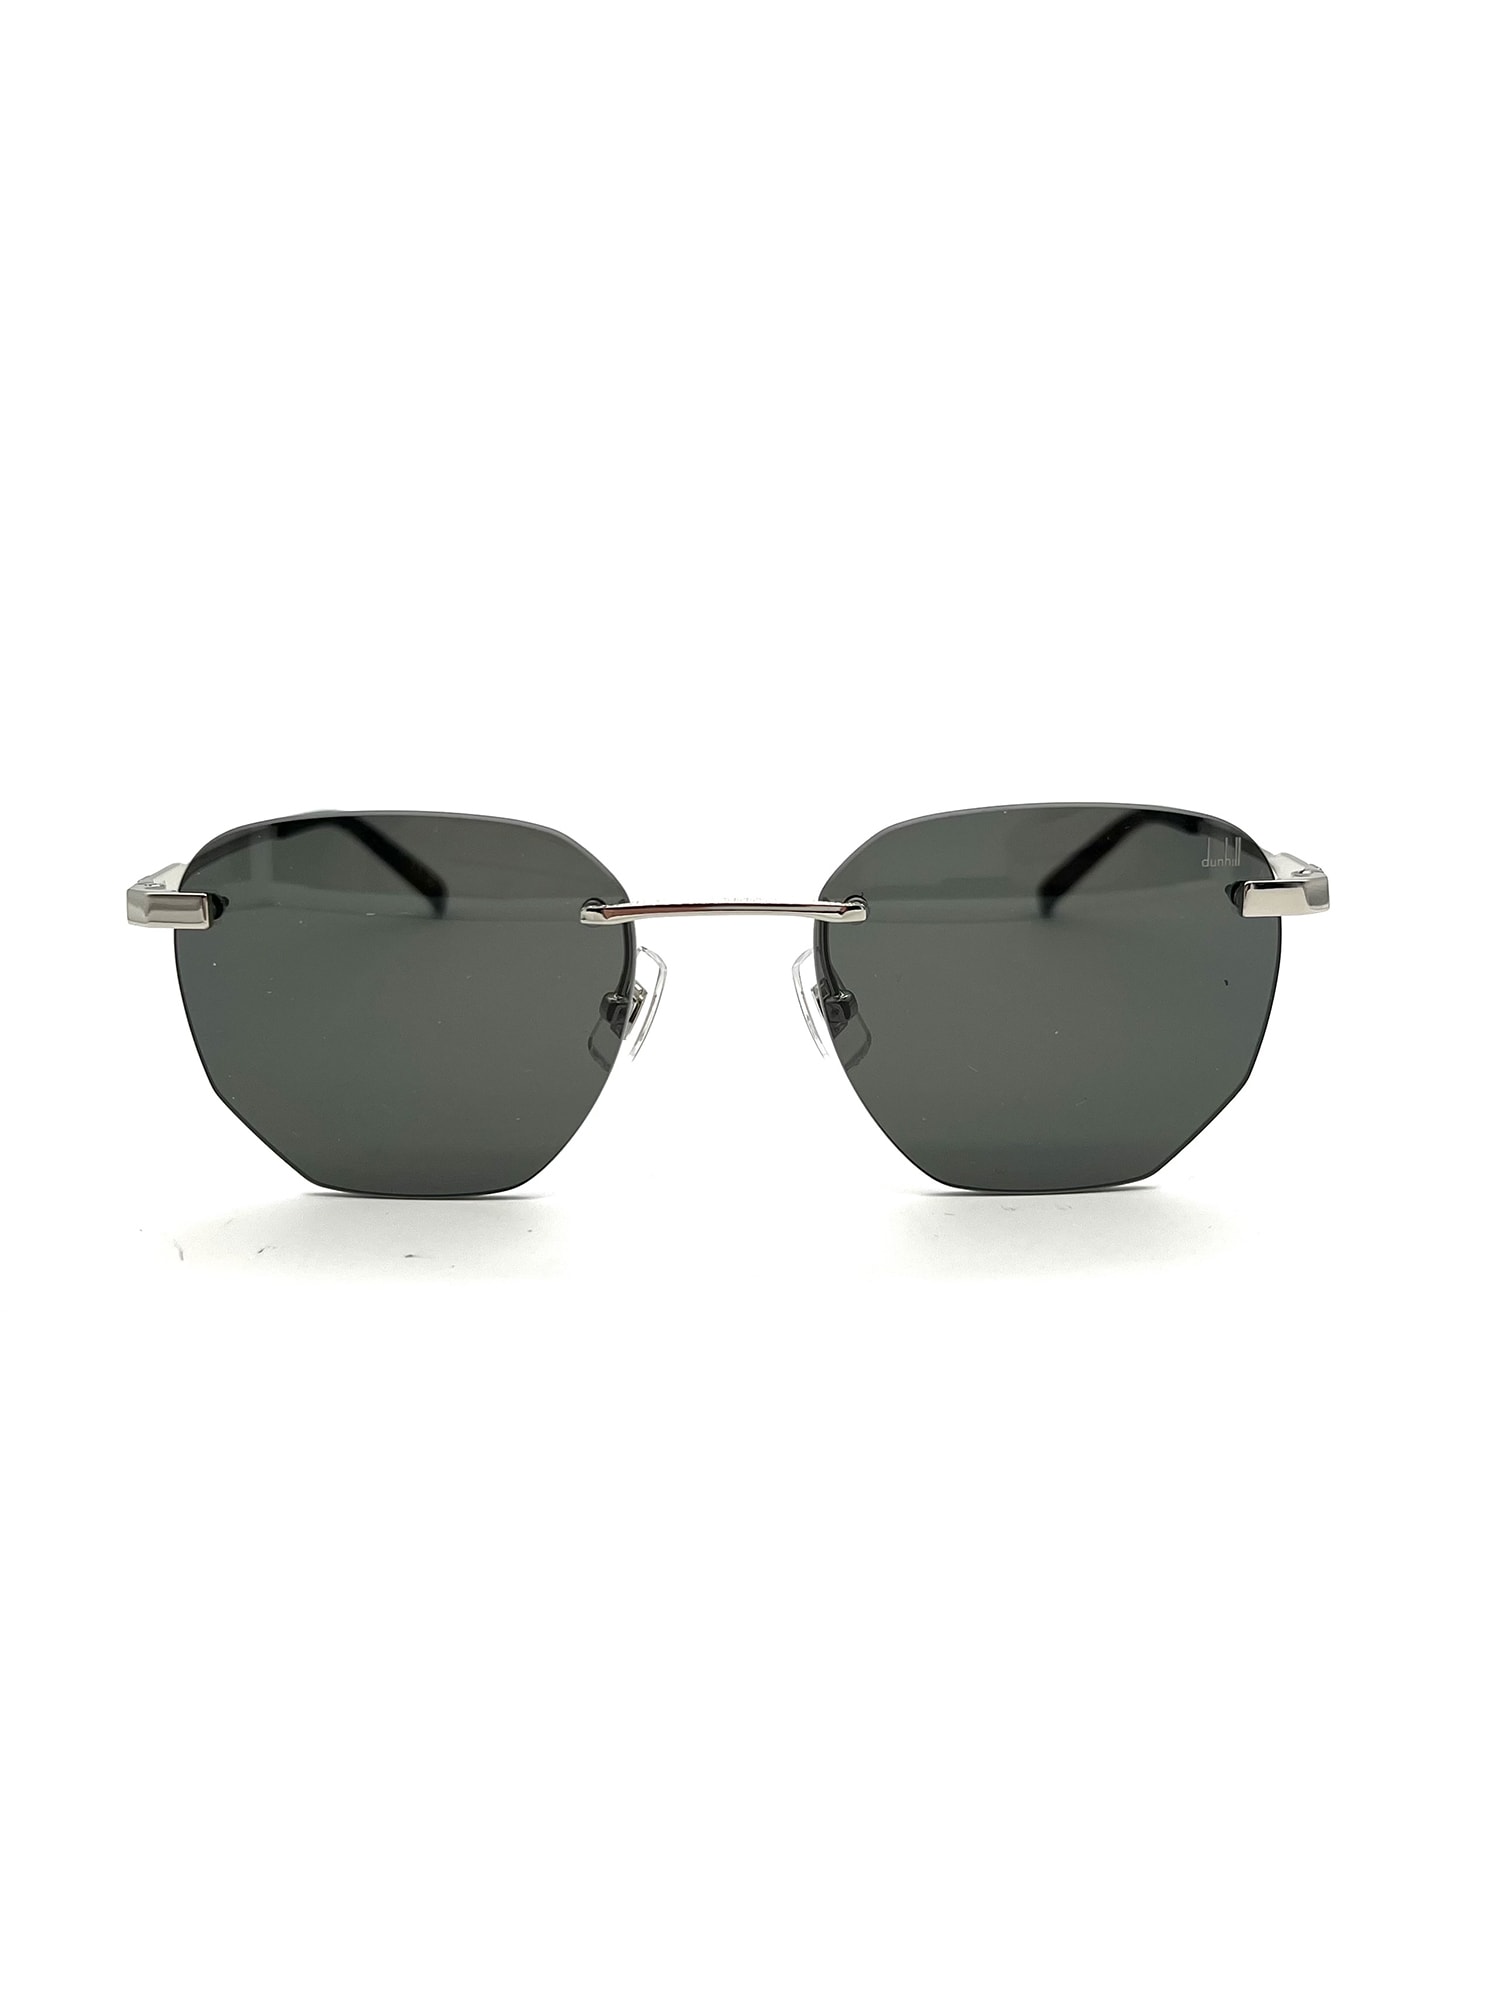 Dunhill Du0066s Sunglasses In Silver Silver Grey